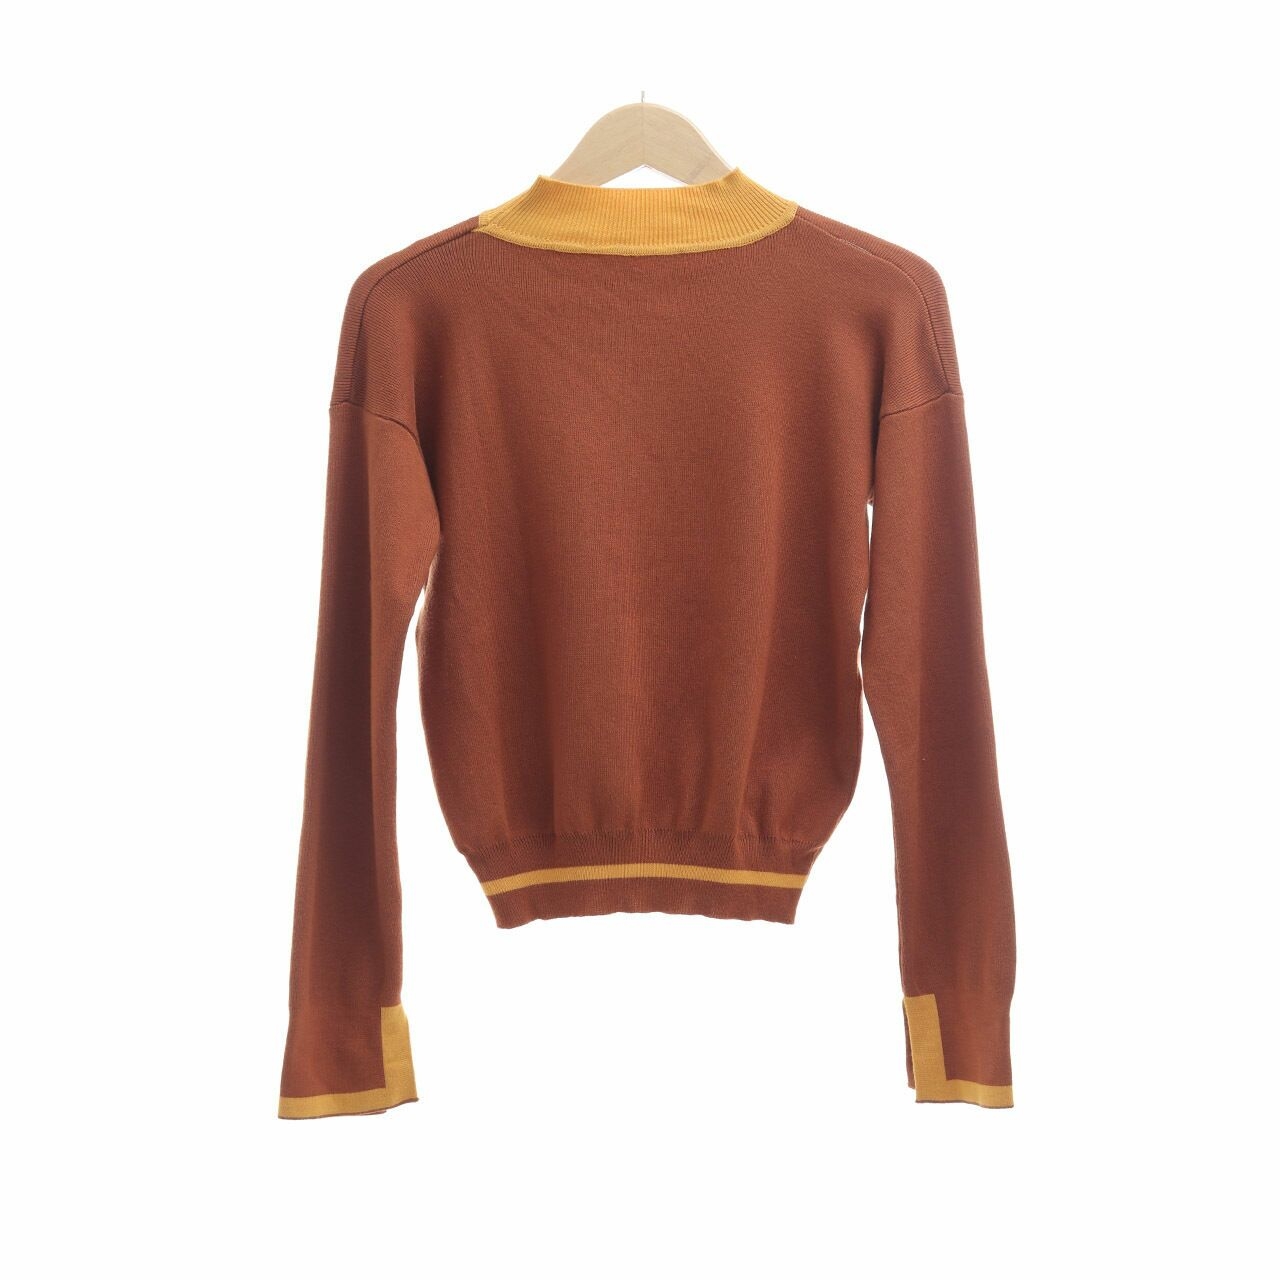 Someday Mustard & Brown Sweater